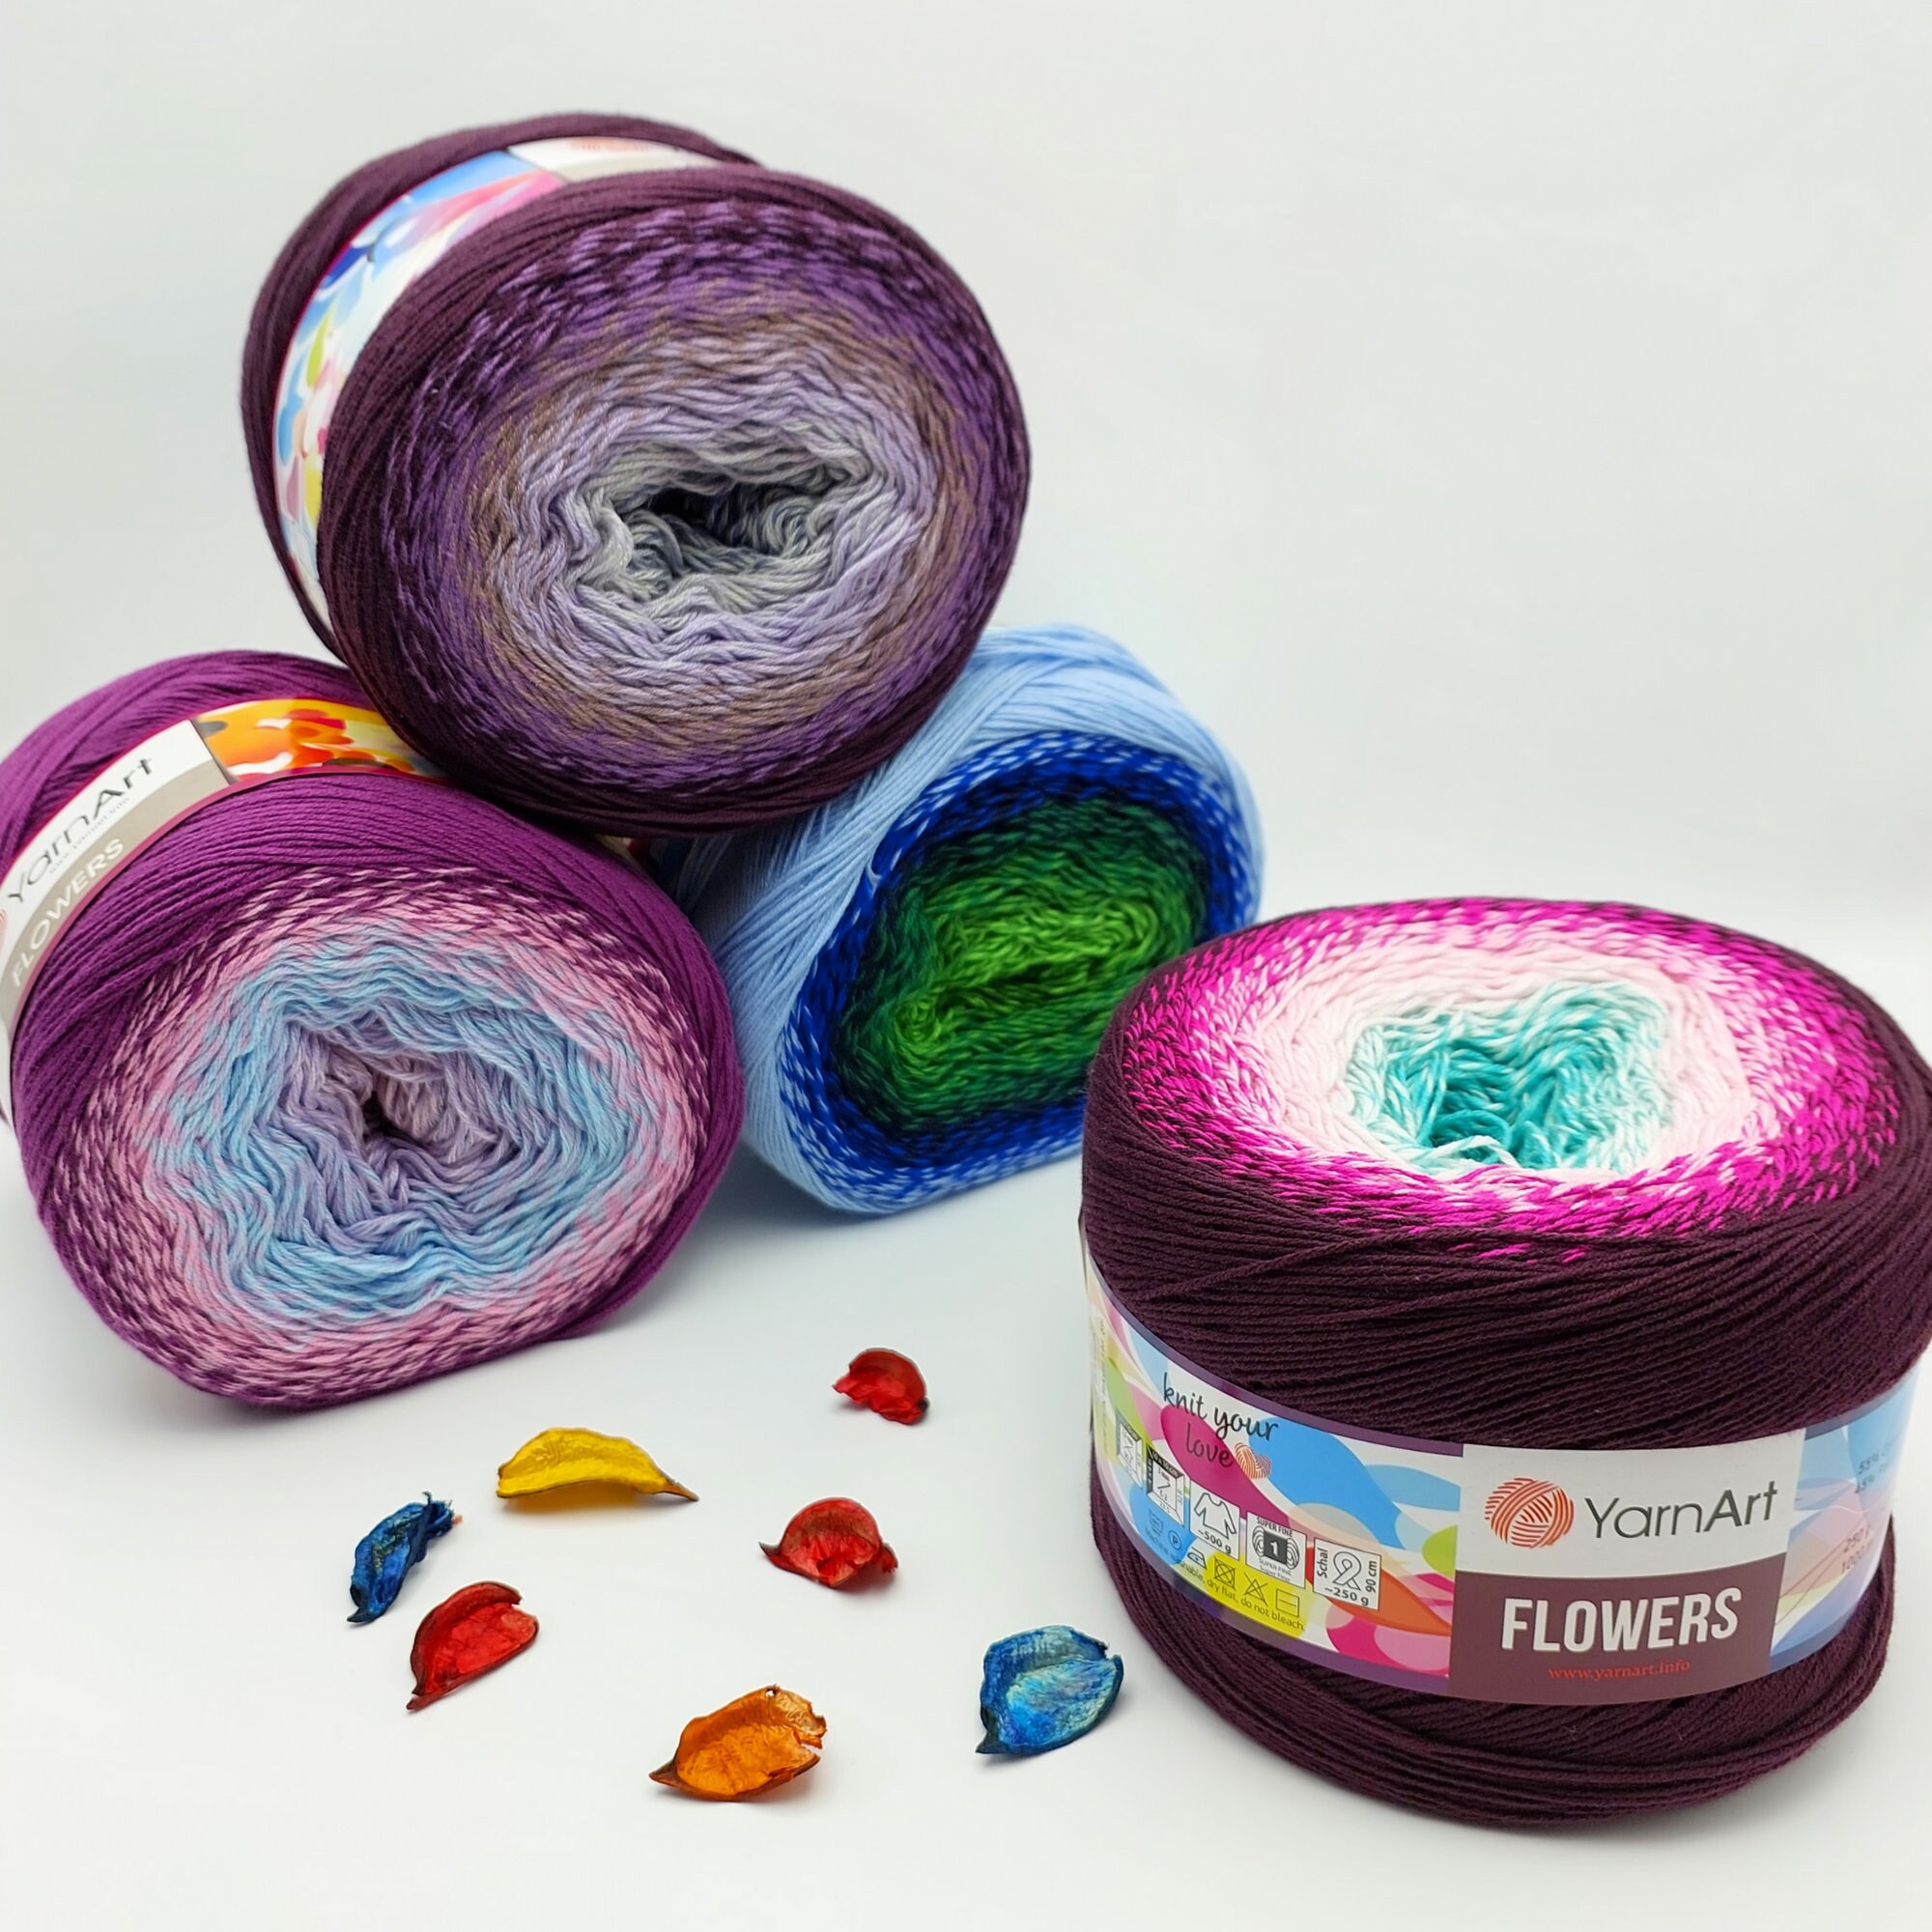 Flowers Merino Yarnart, Gradient Yarn Cakes, 25% Wool, Acrylic, Ombre Yarn  for Crochet and Knitting 